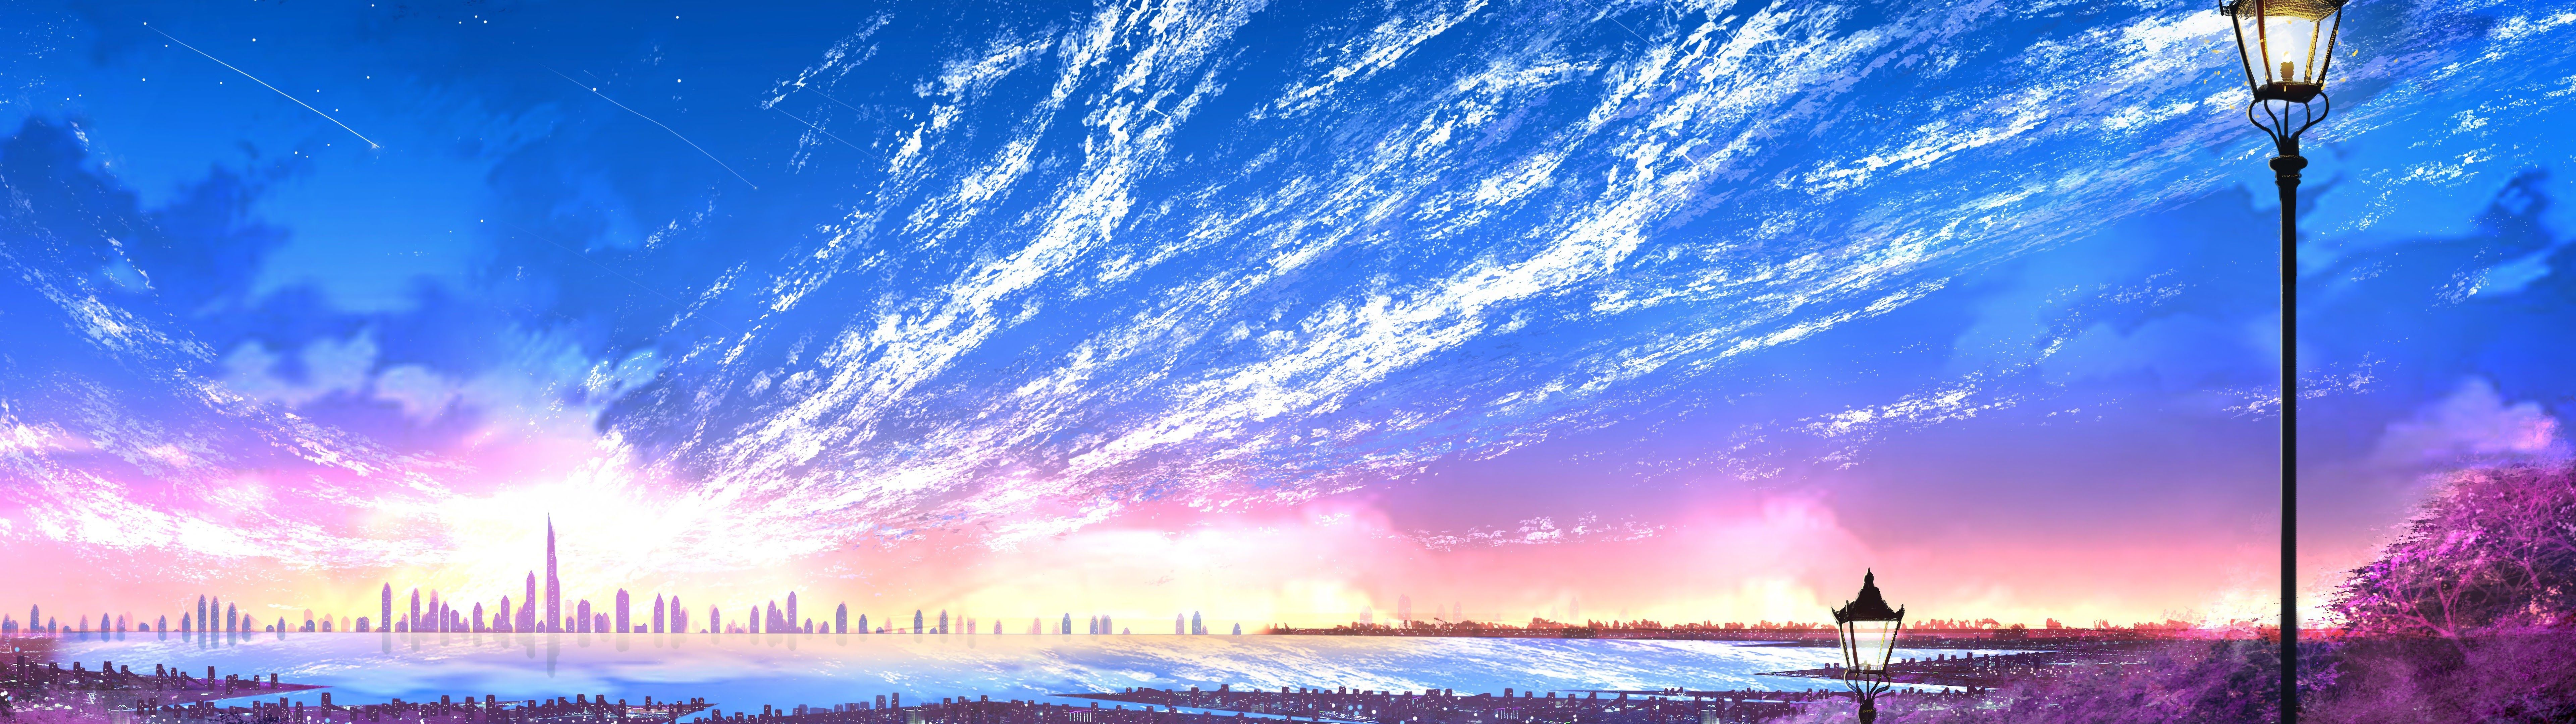 anime landscape